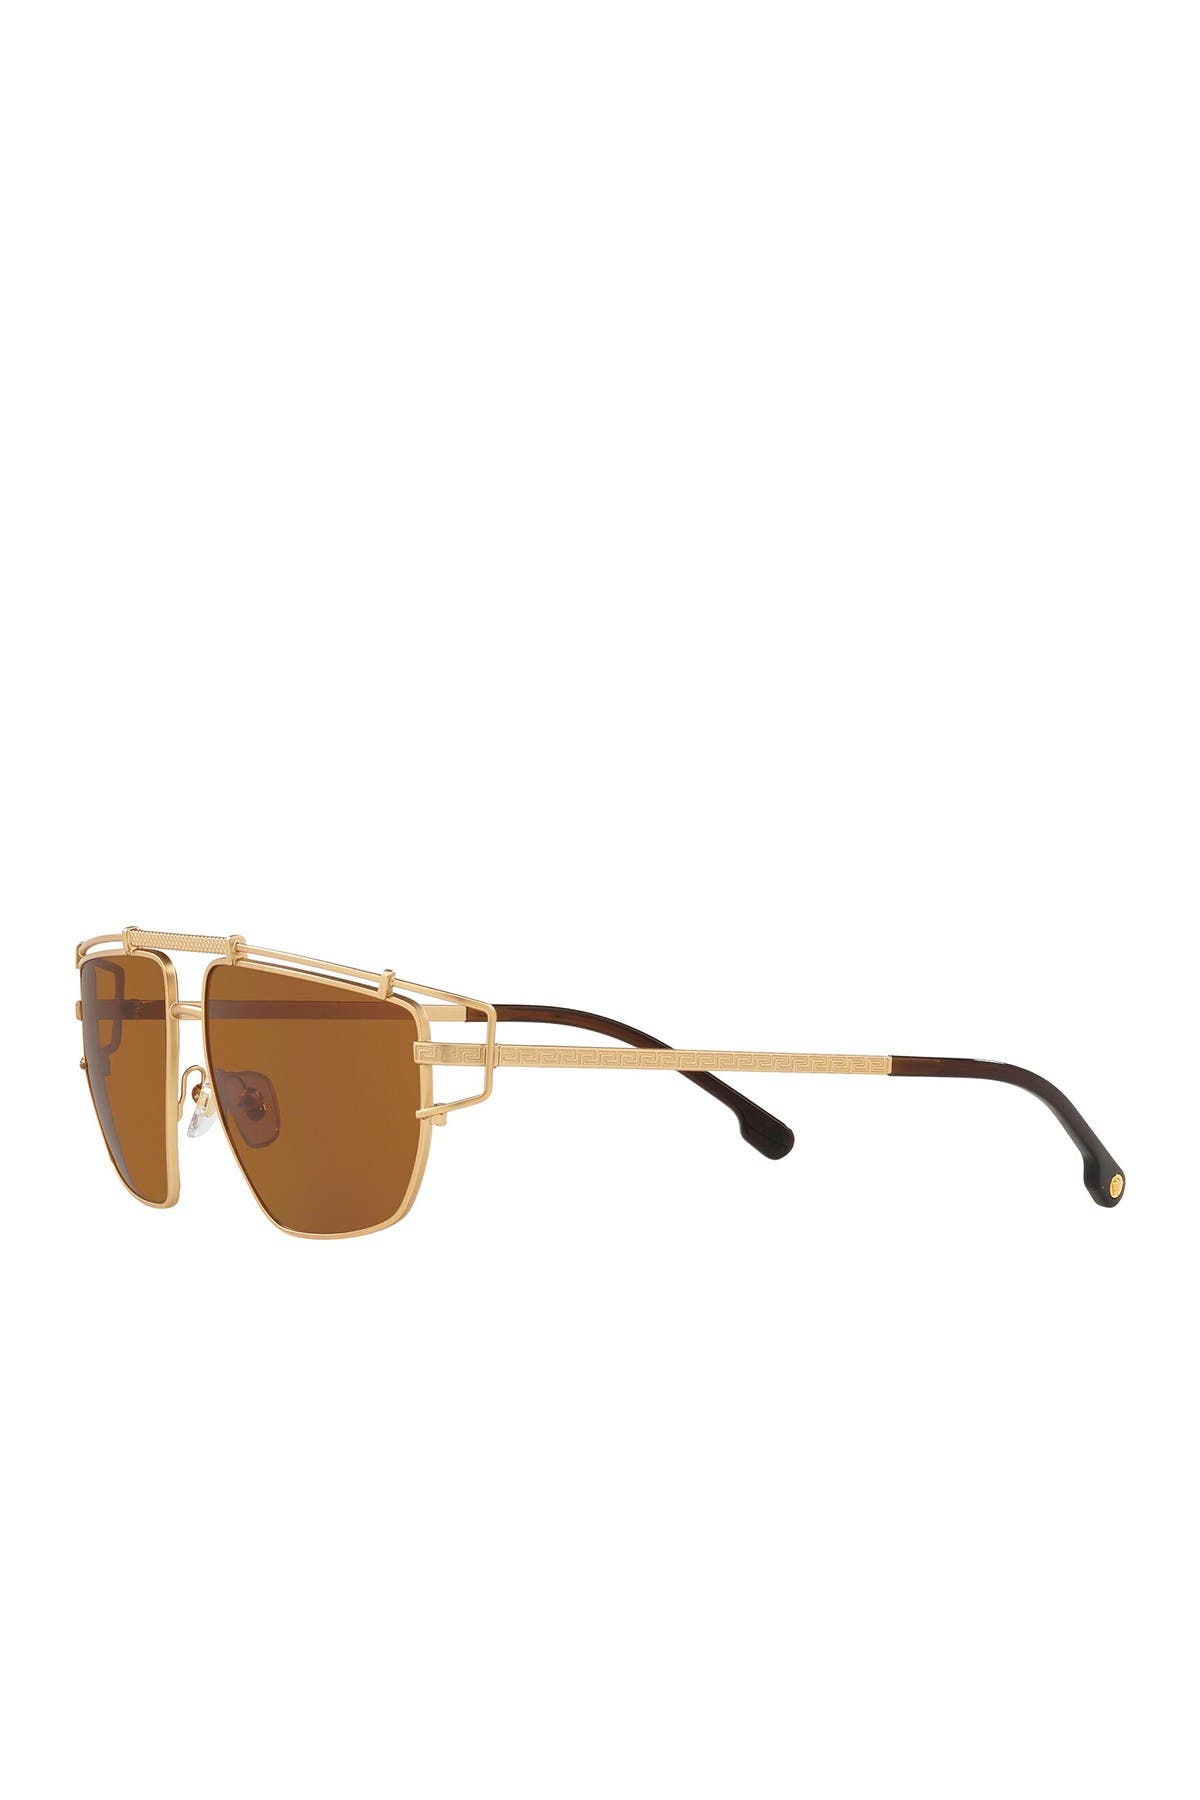 versace navigator sunglasses